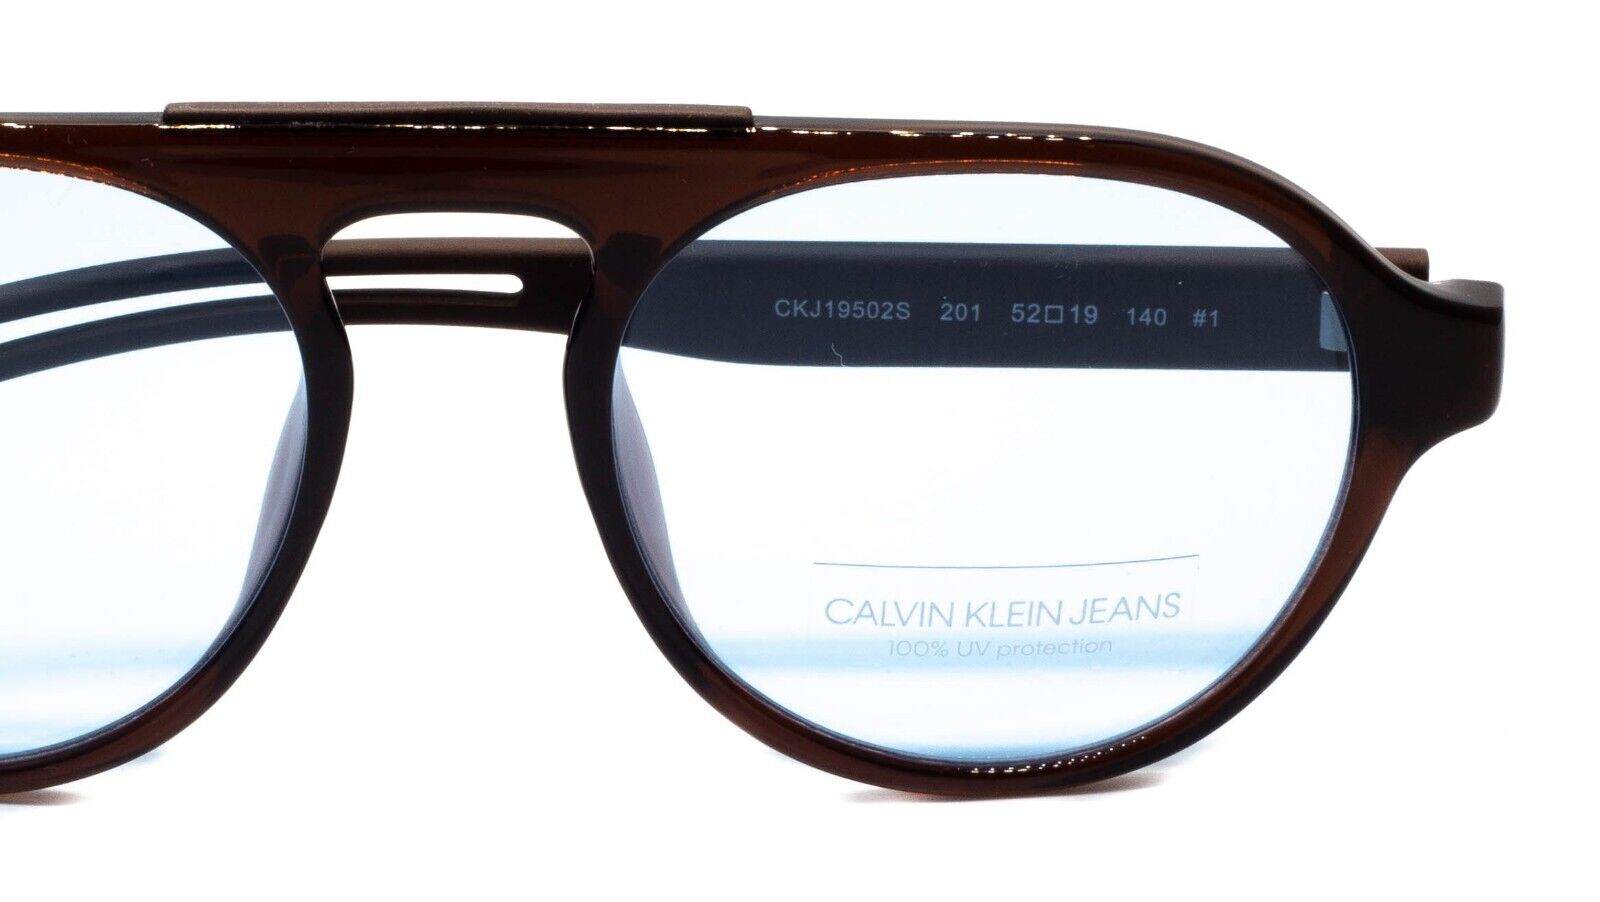 CALVIN KLEIN JEANS CKJ 19502S Eyewear New Sunglasses #1 - Eyewear Shades GGV Frames 201 52mm 